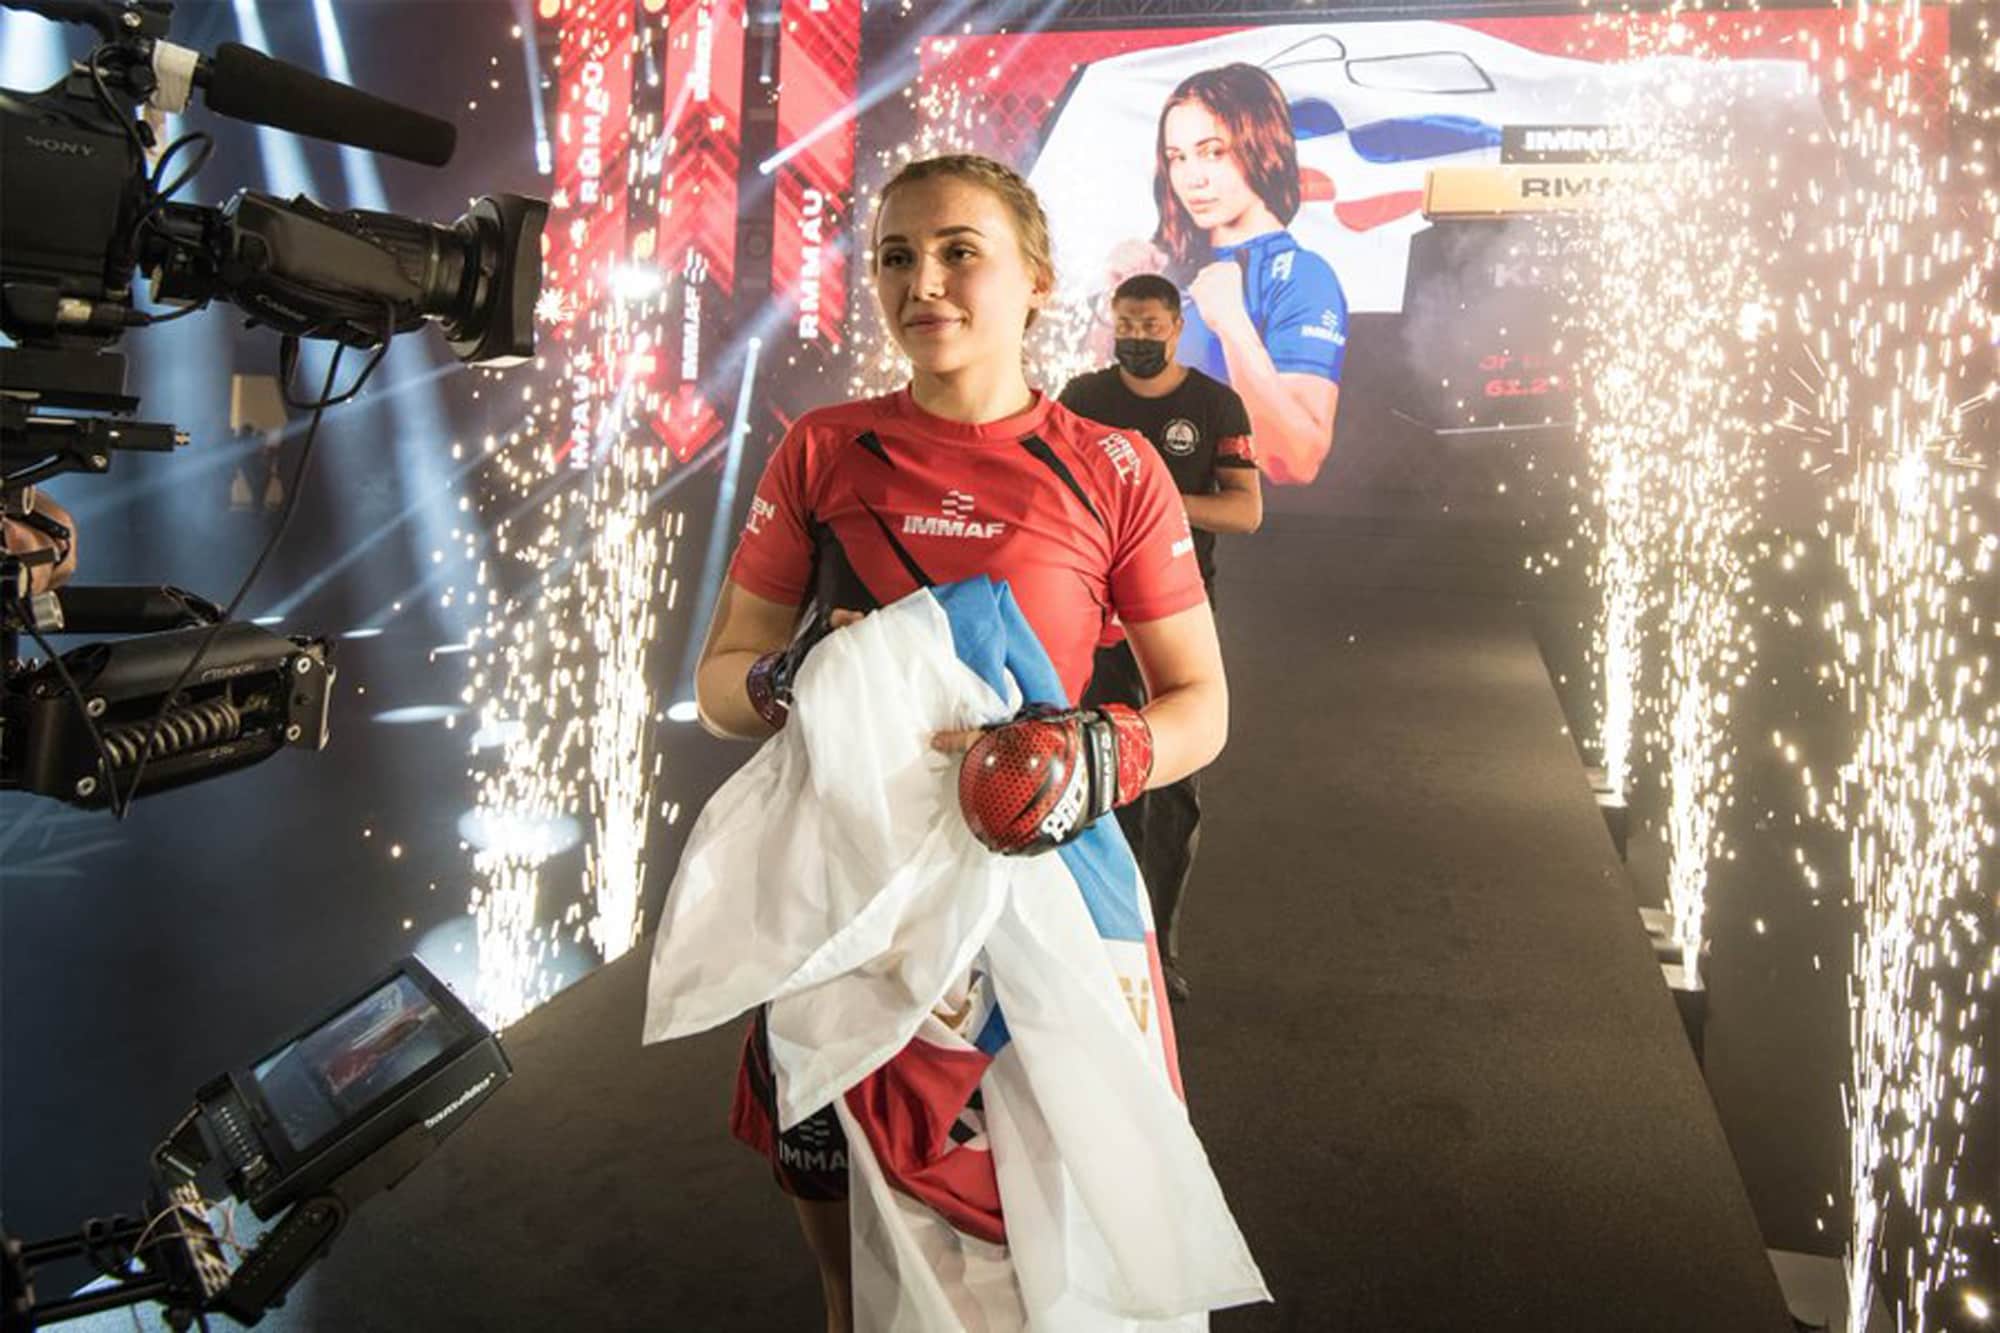 Anastasiya Karmaeva describes her journey to becoming an IMMAF World Champion